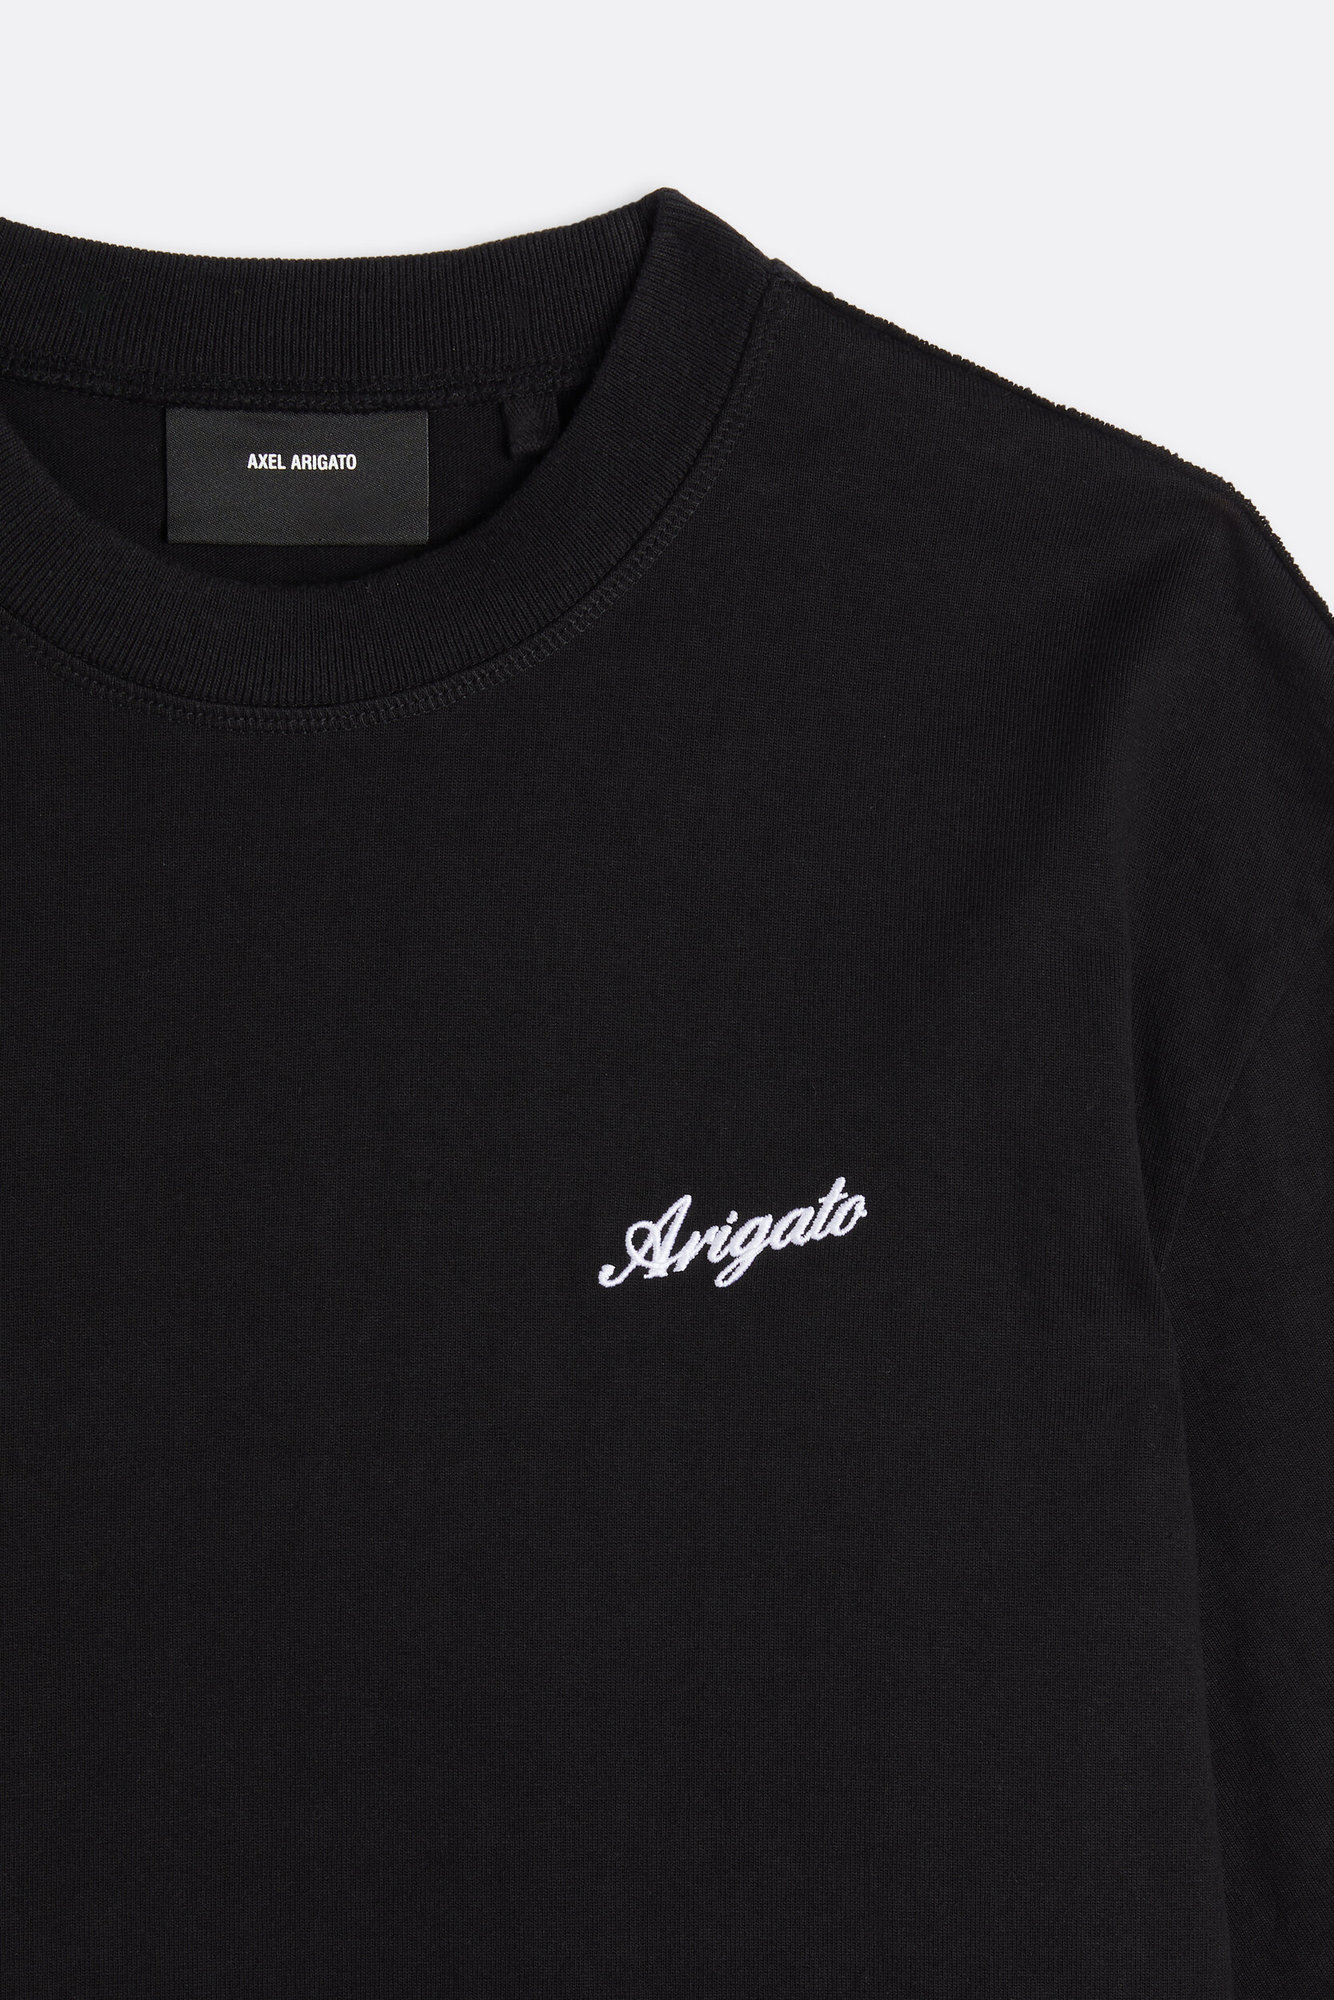 AXEL ARIGATO Honor T-Shirt in Black